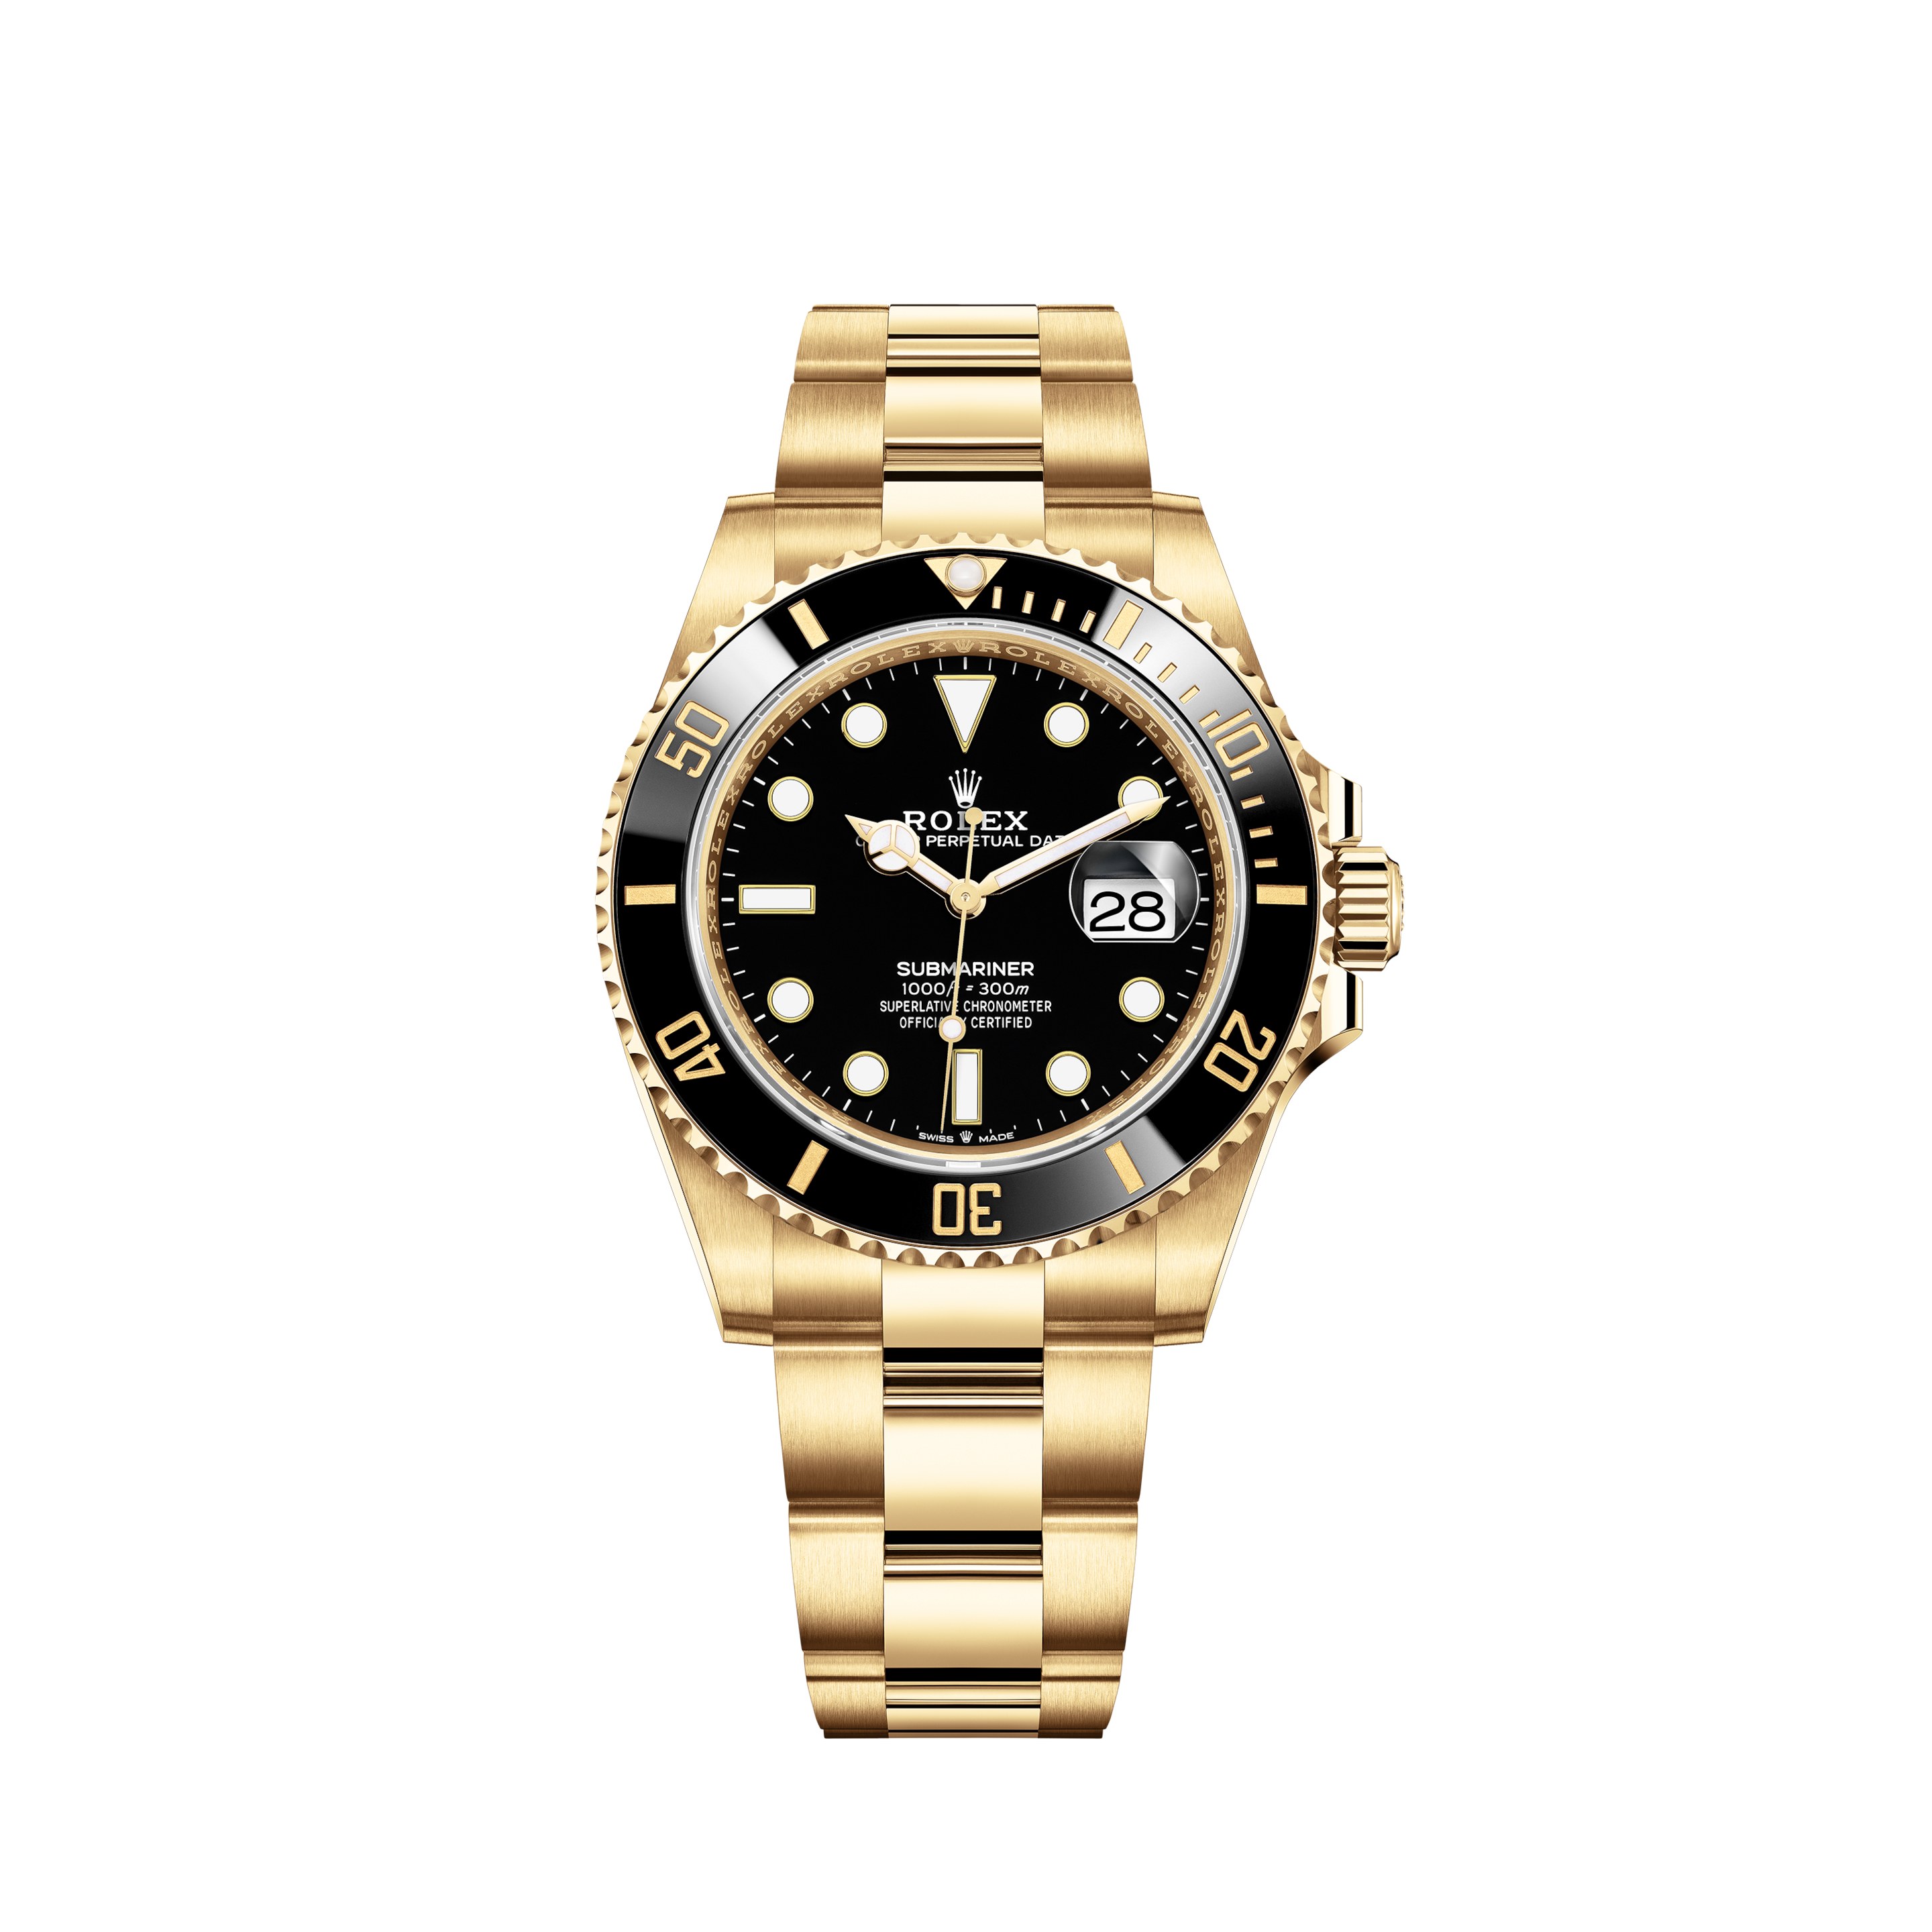 Rolex Lady Datejust 18K Gold Automatic Women's Watch Oyster Perpetual Ref. 6901Rolex Lady Datejust 18K Gold Automatic Women's Watch Oyster Perpetual Ref. 6917